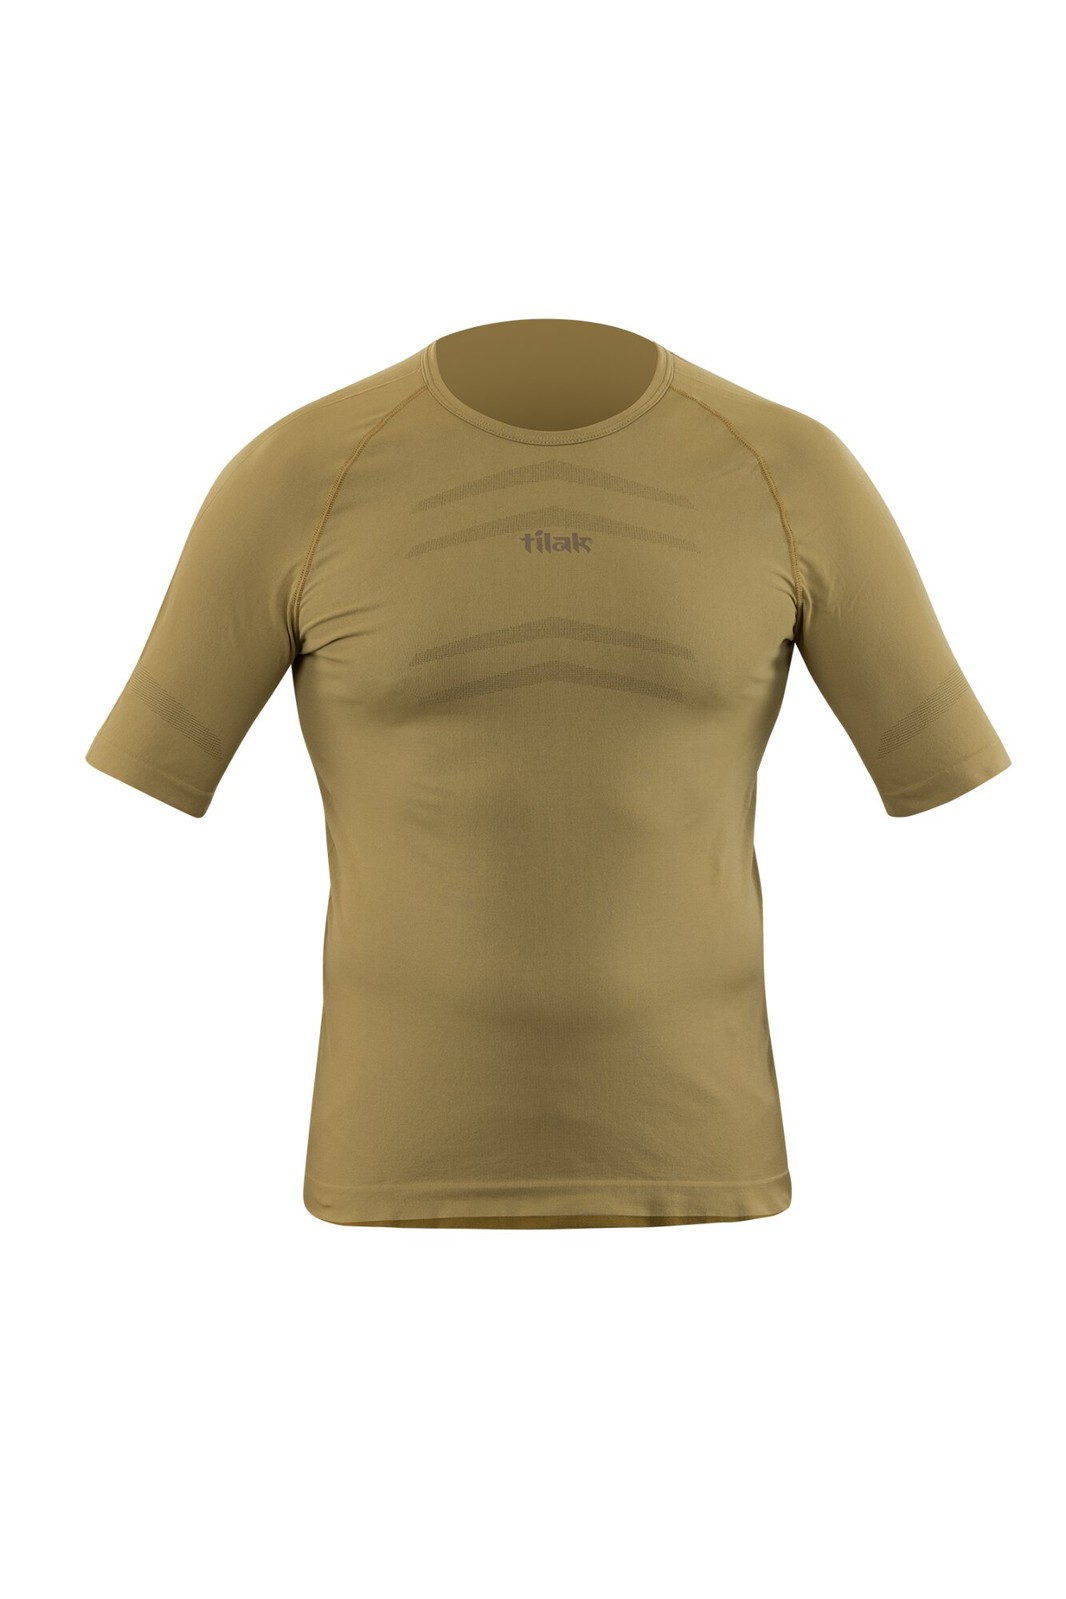 Triko Ultralite Tilak Military Gear® – Tan (Barva: Tan, Velikost: S/M)